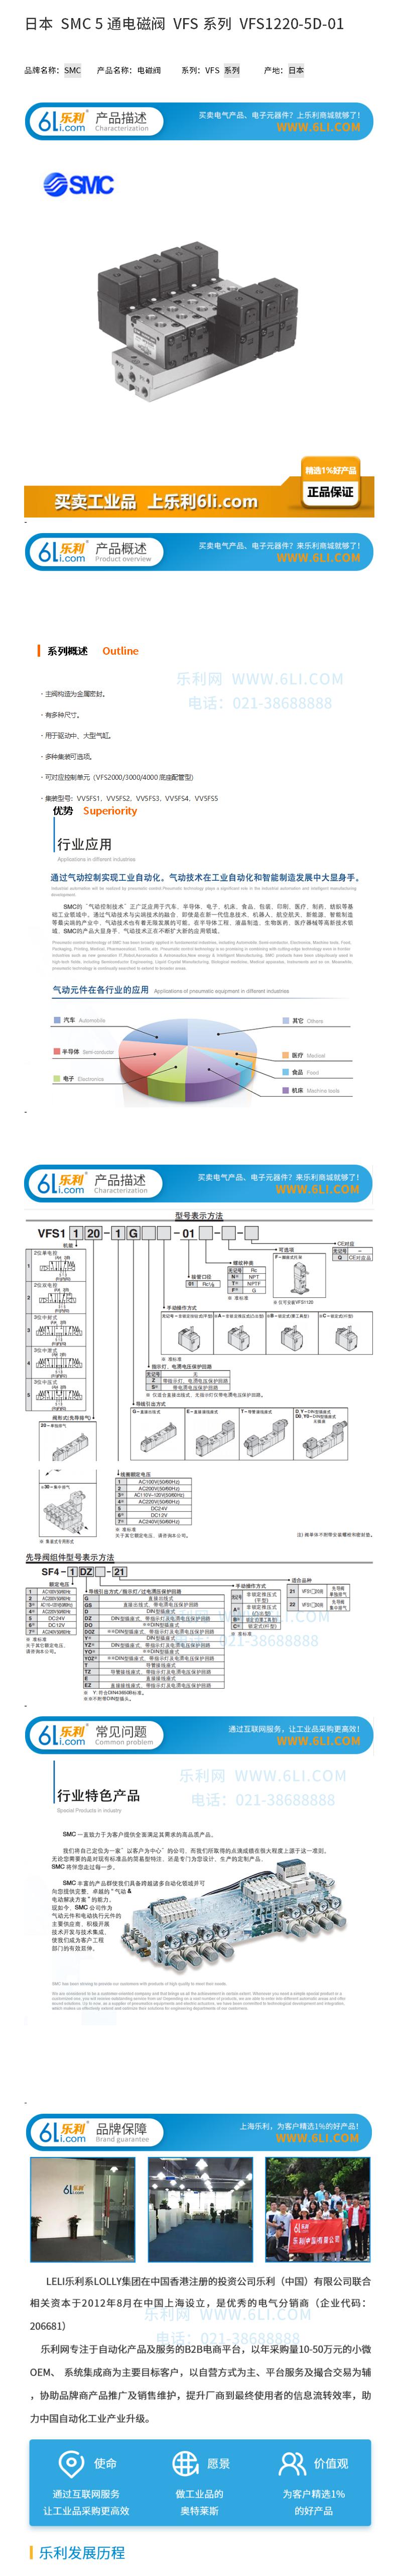 SMC 电磁阀 VFS1000-6000 系列 整理资料（己）1.jpg